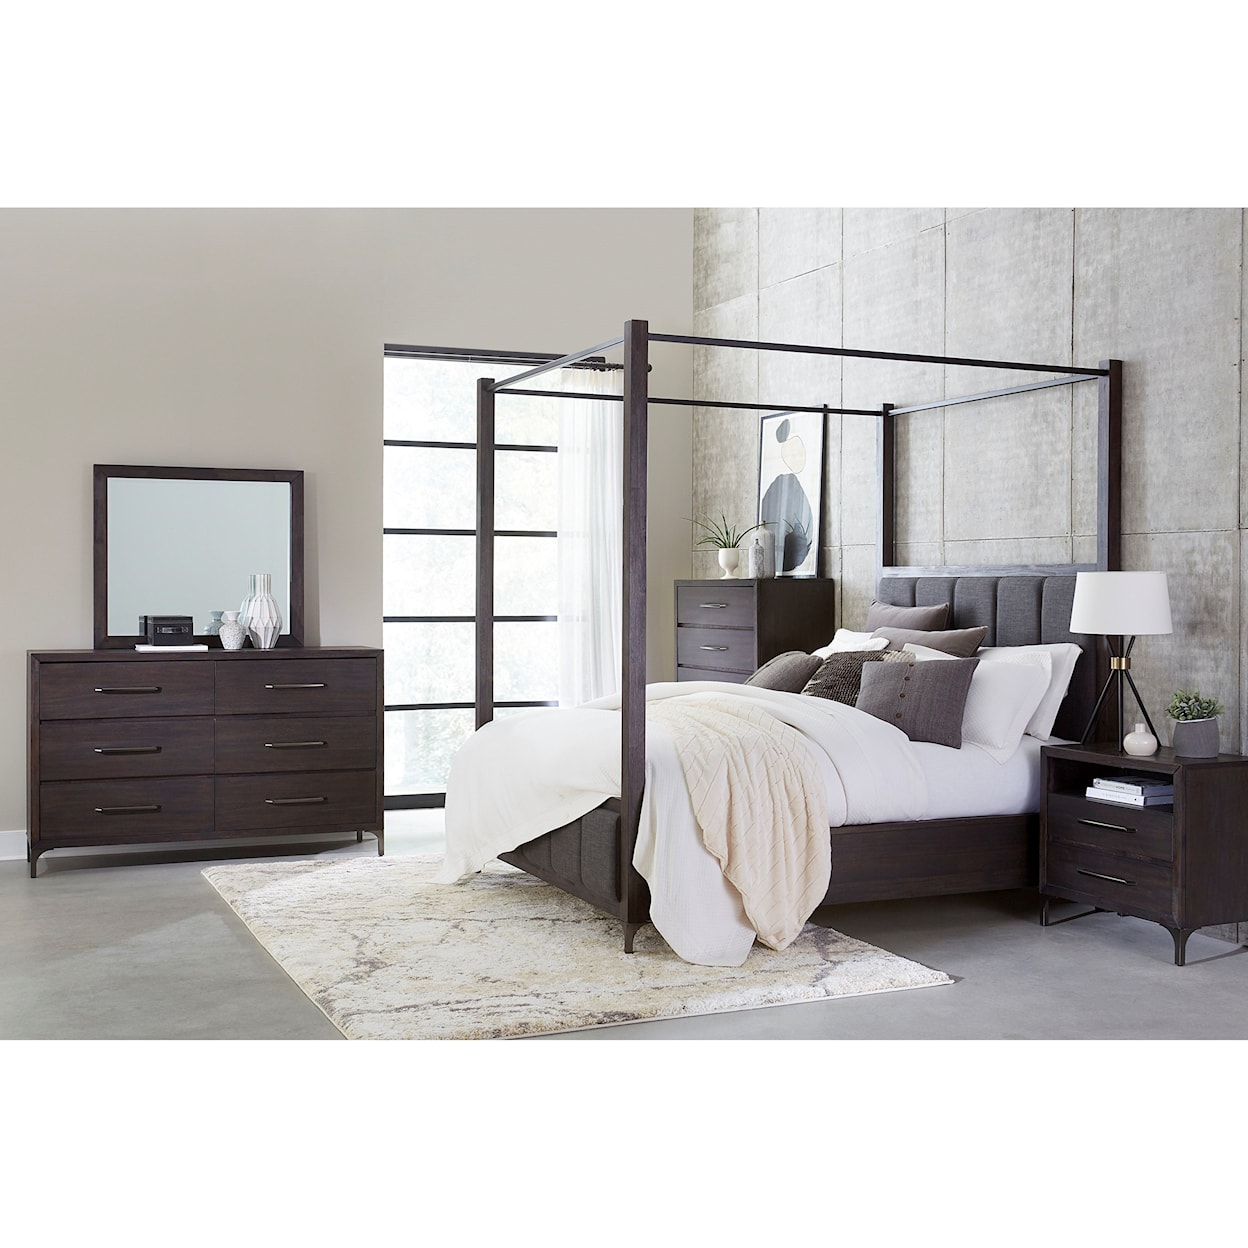 Modus International Lucerne California King Bedroom Group